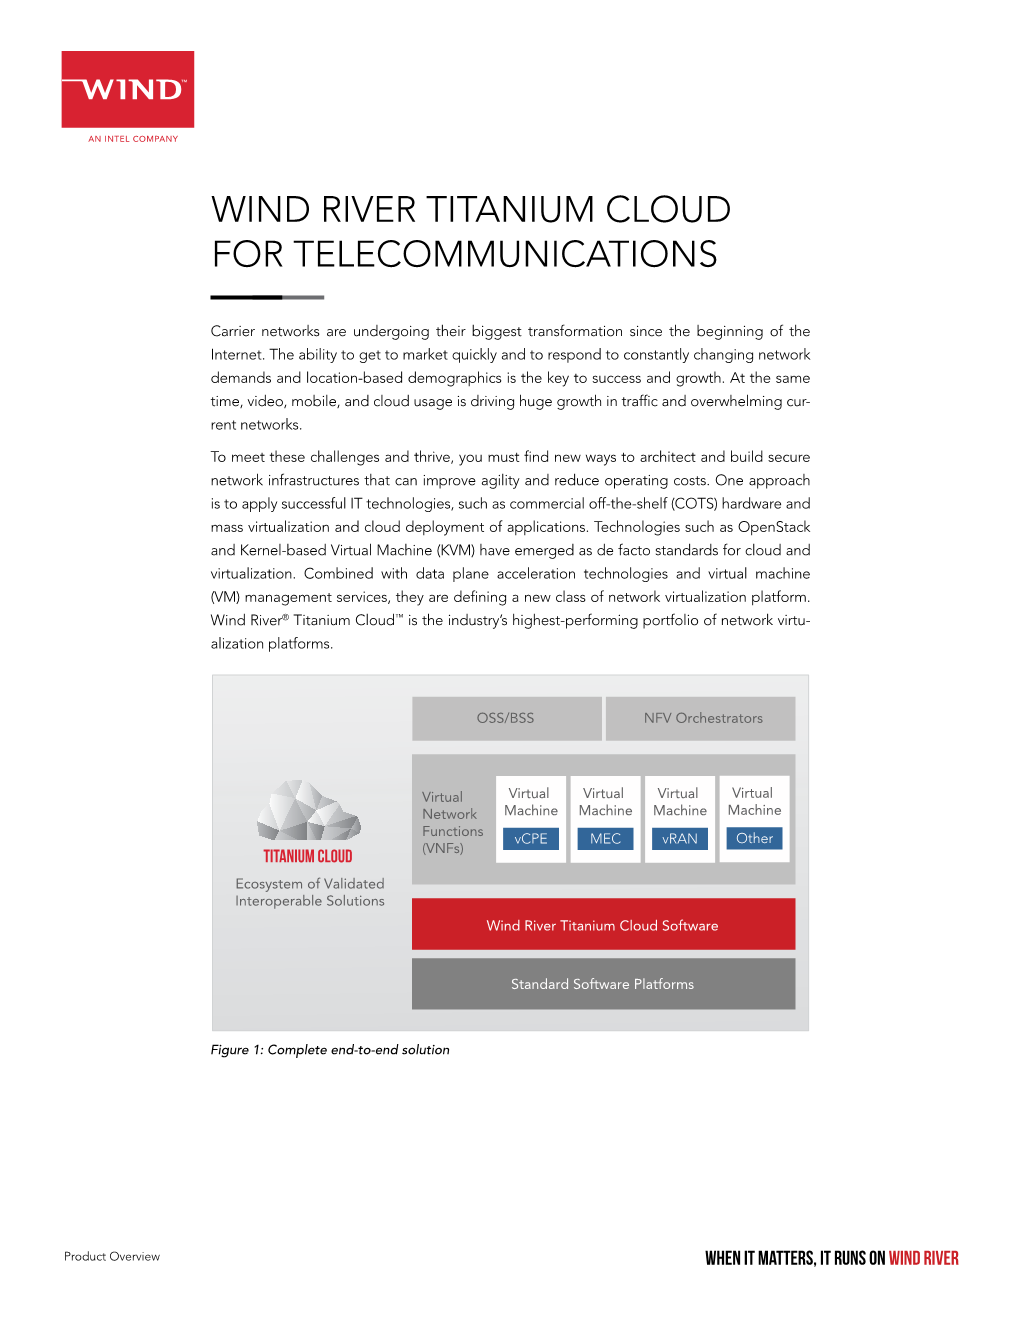 Wind River Titanium Cloud for Telecommunications